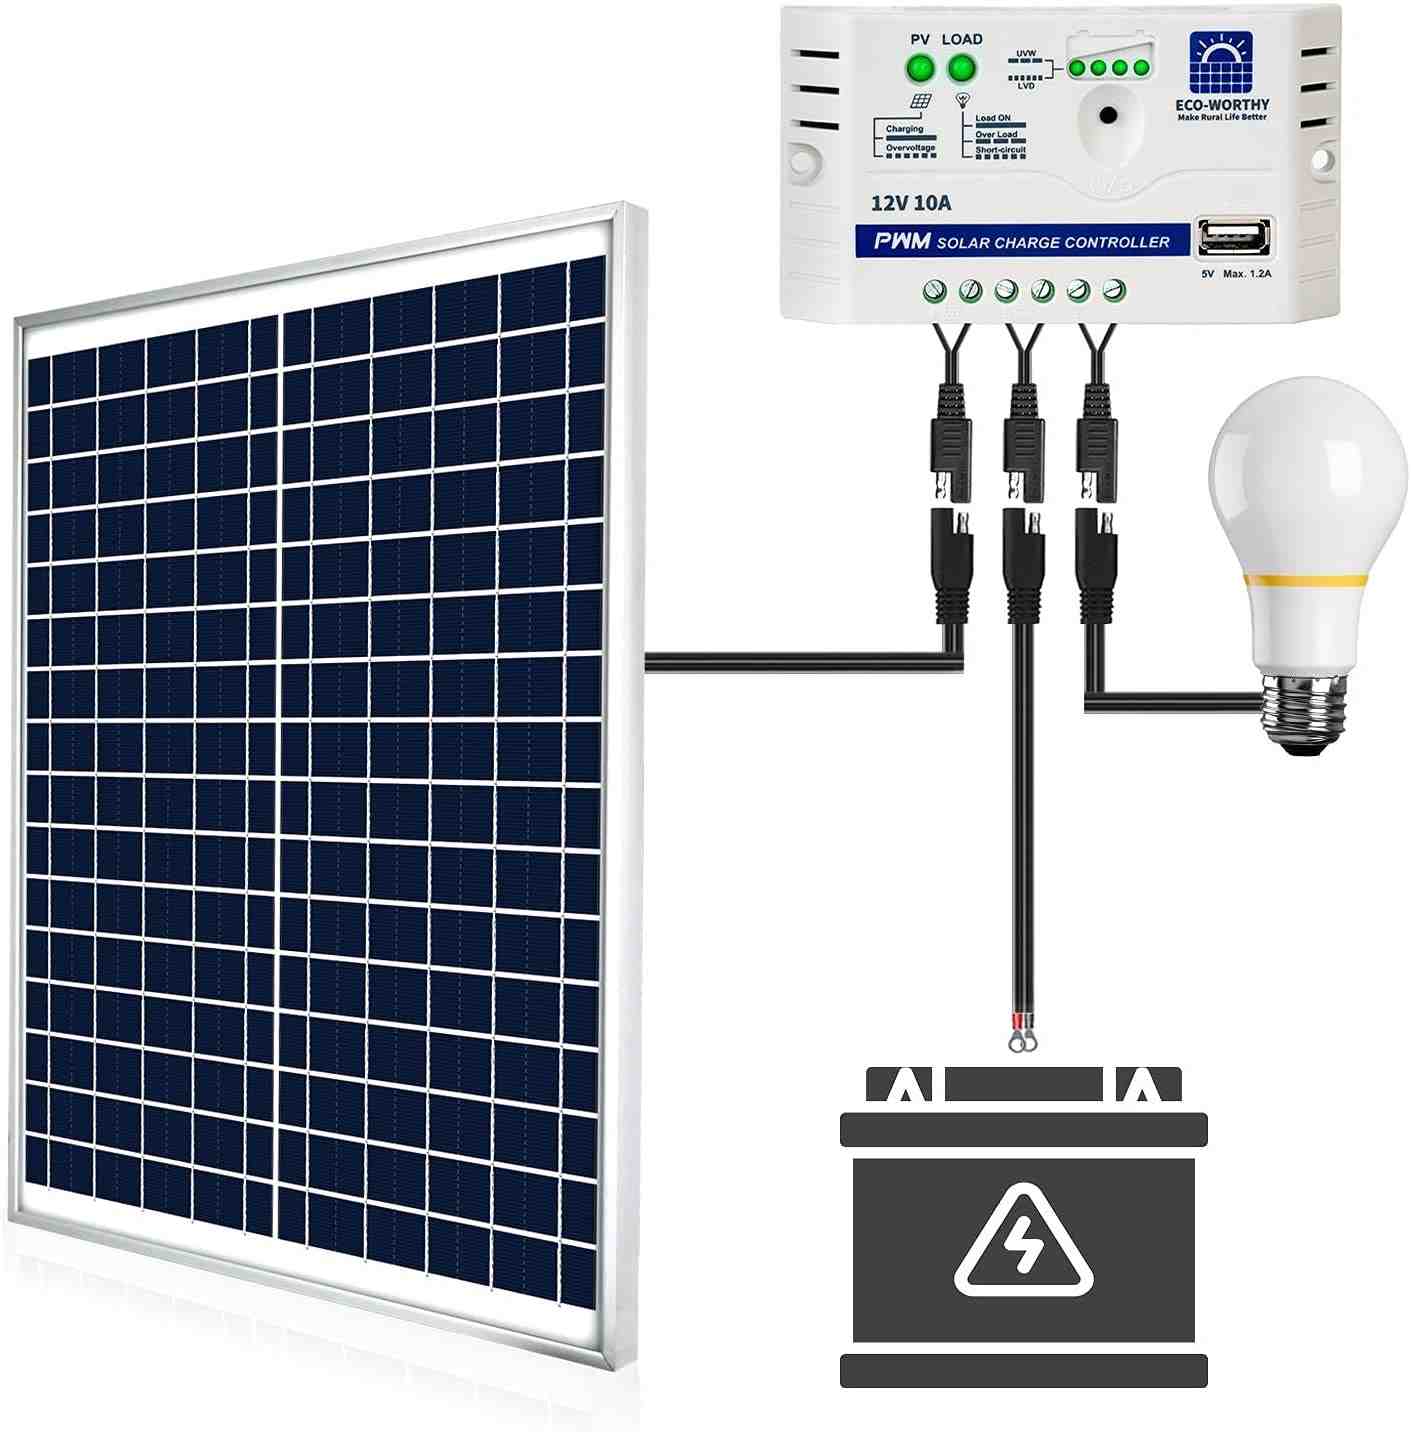 How can I make a 12 volt solar panel at home?